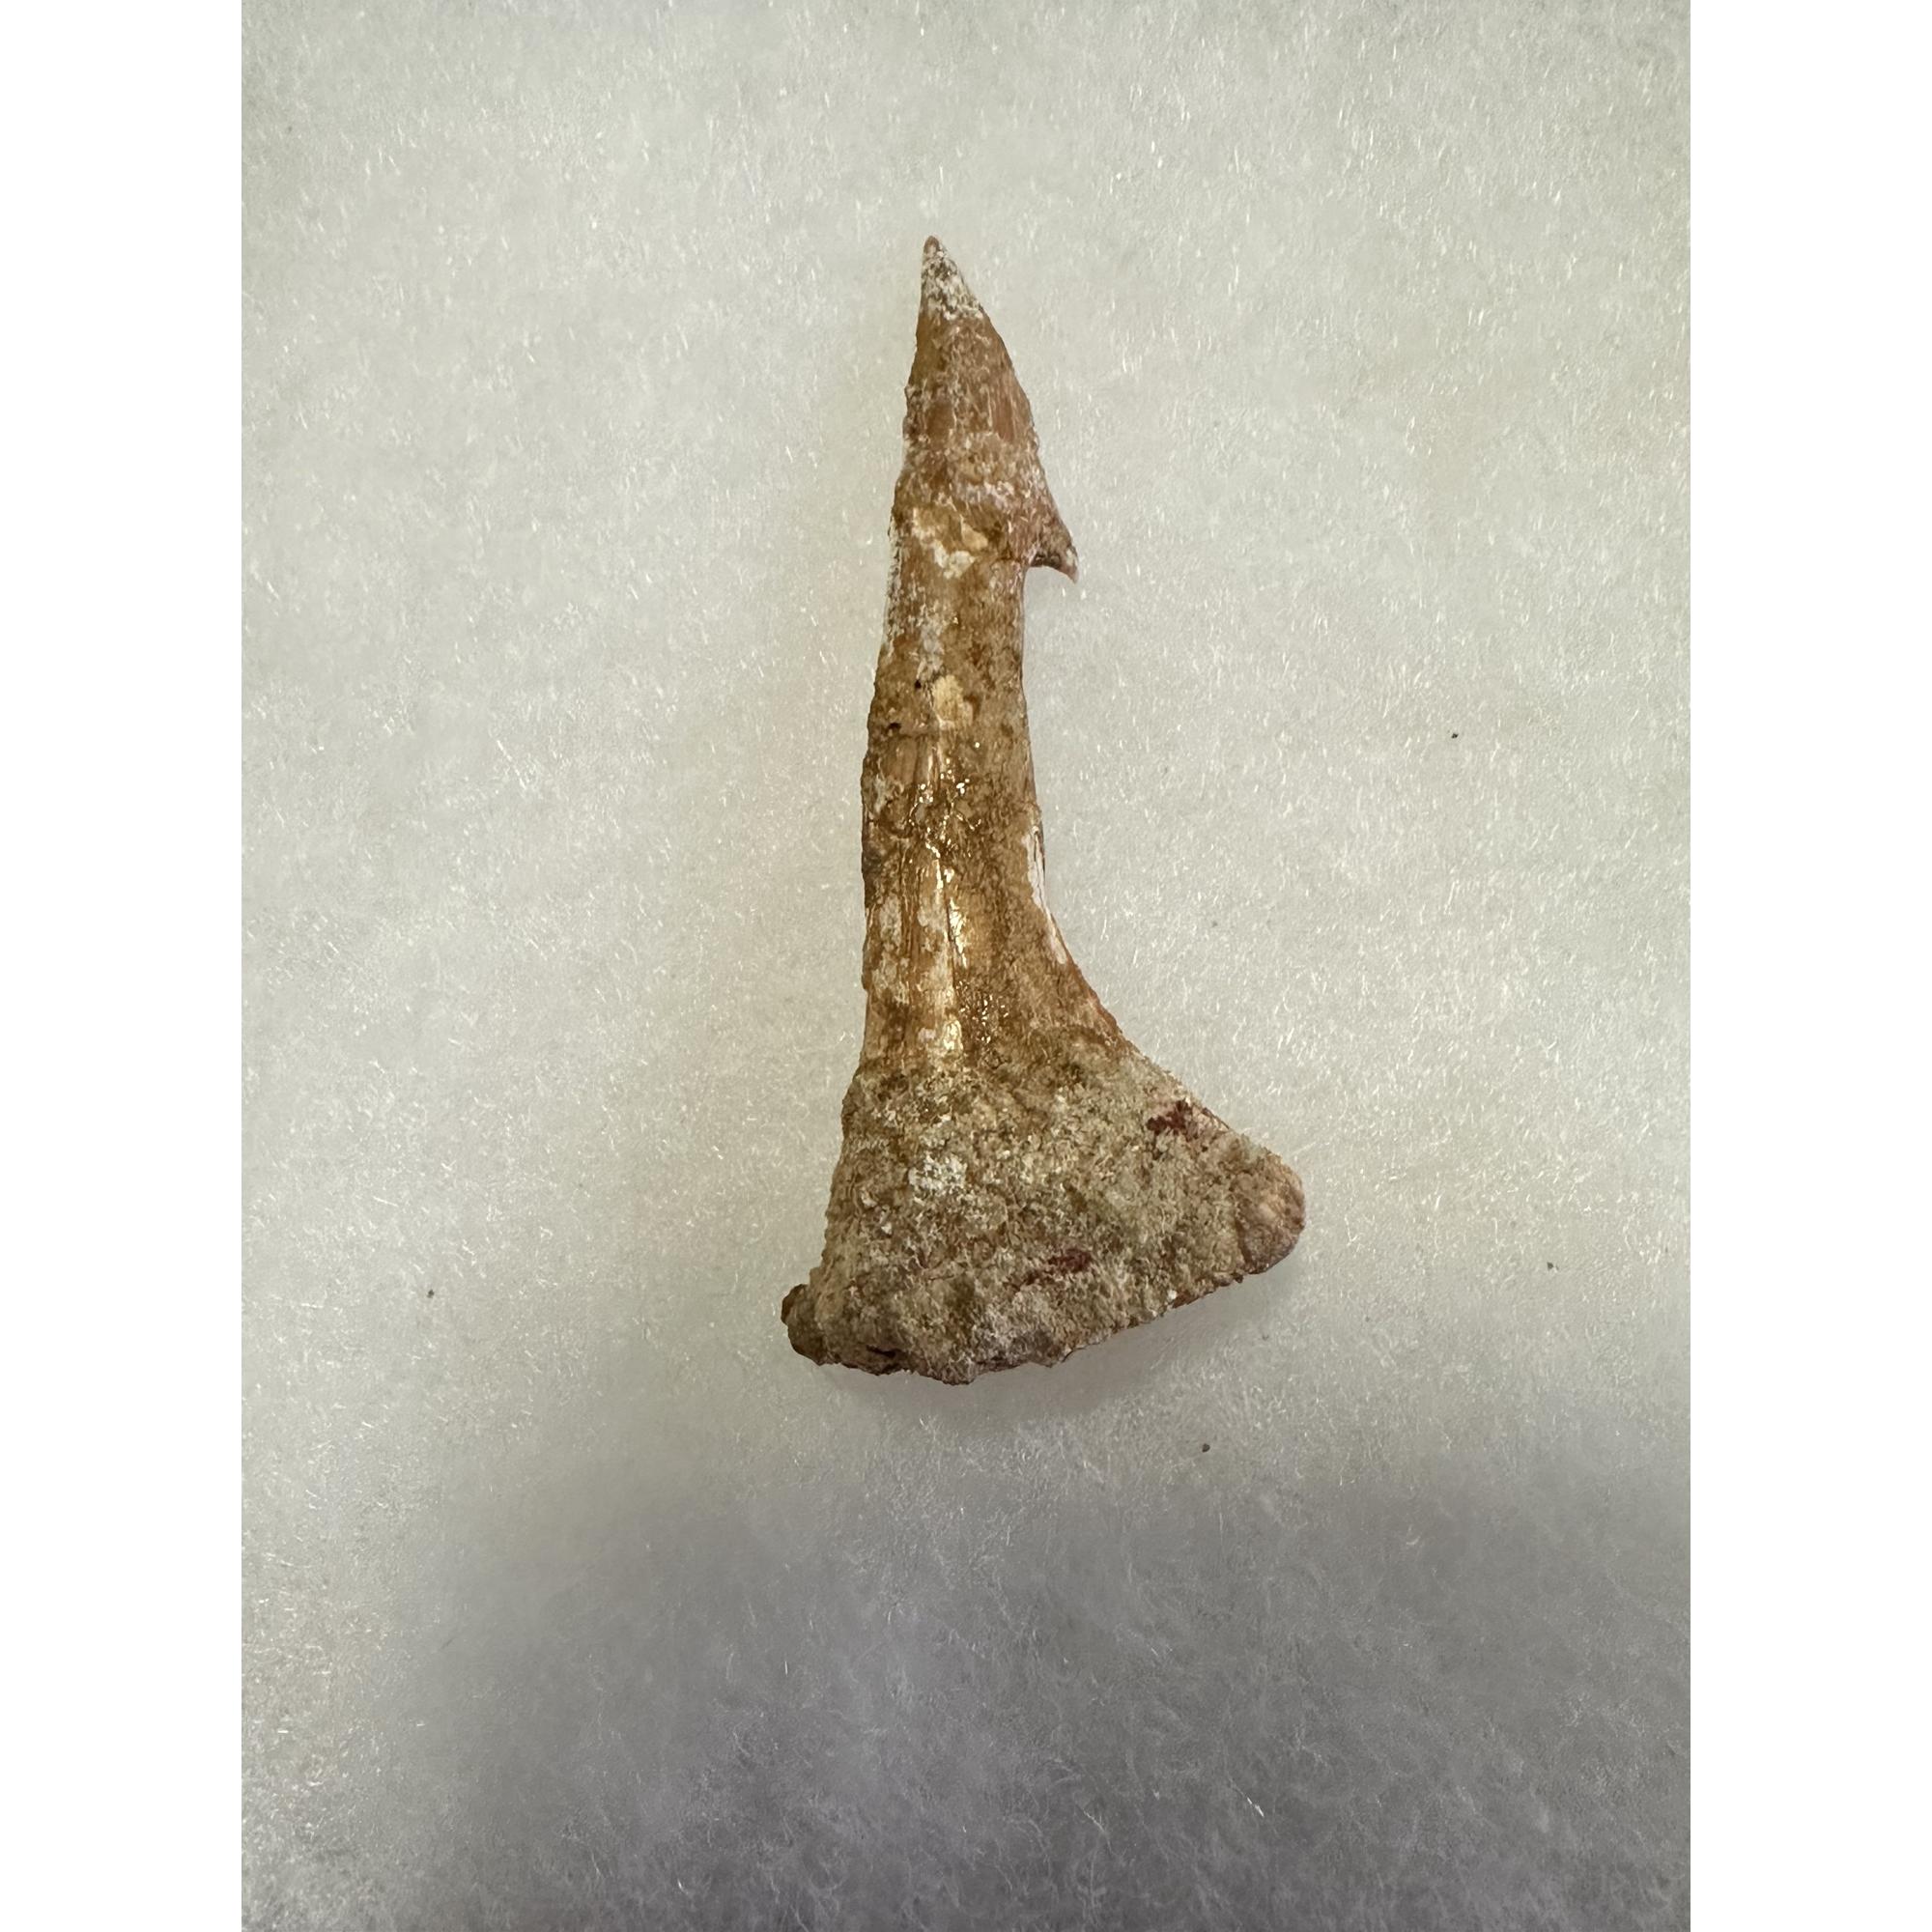 Sawfish Barb, Onchopristis, Sandstone covered Prehistoric Online